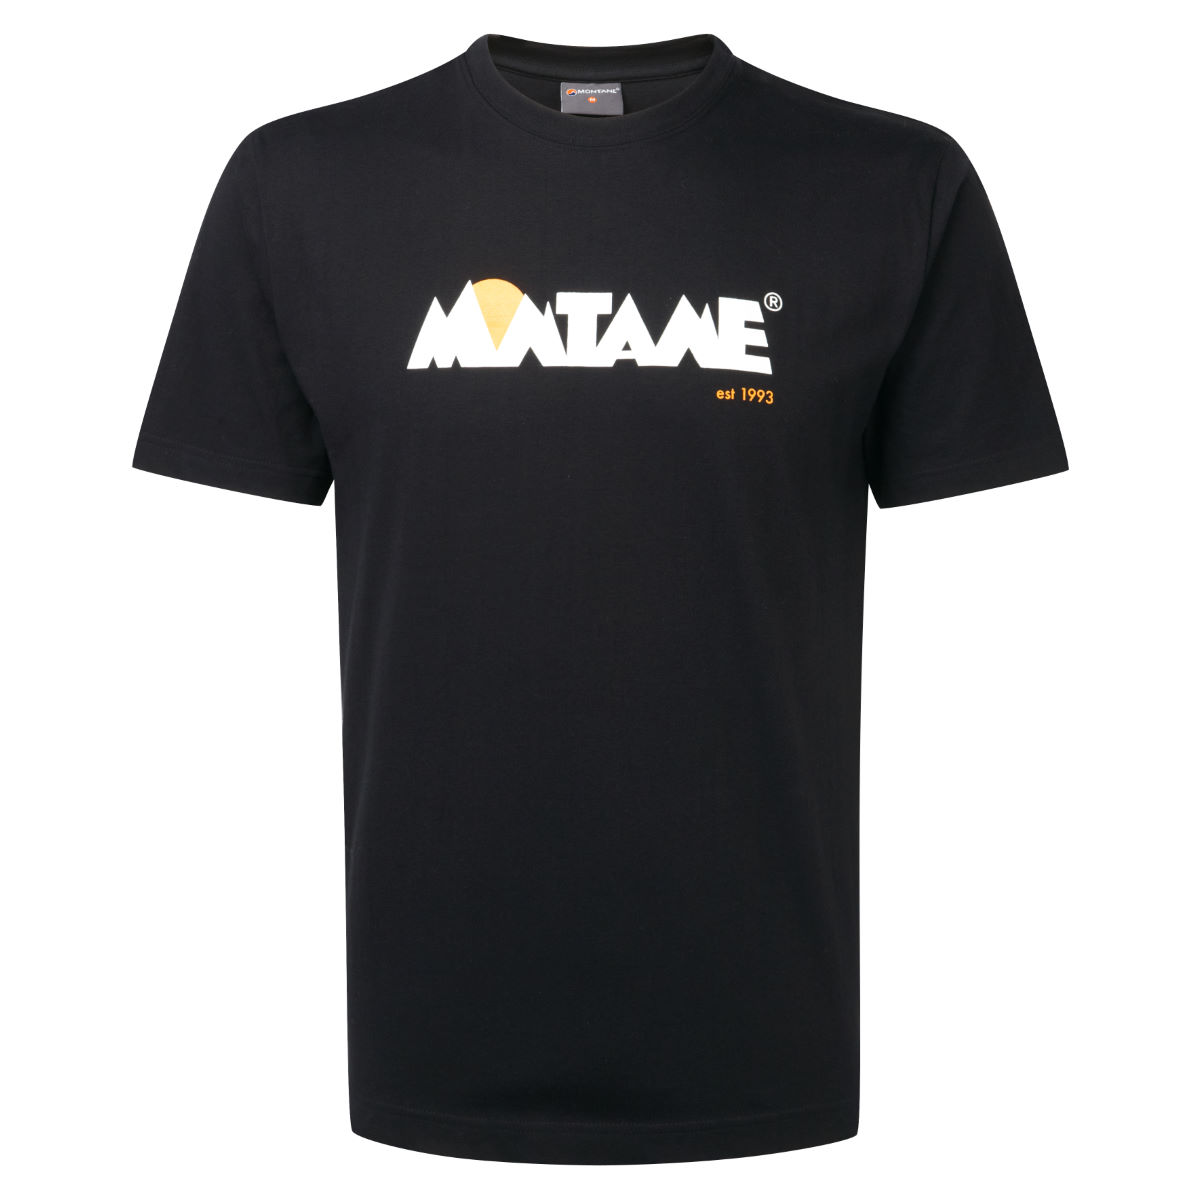 Camiseta de manga corta Montane 1993 - Camisetas